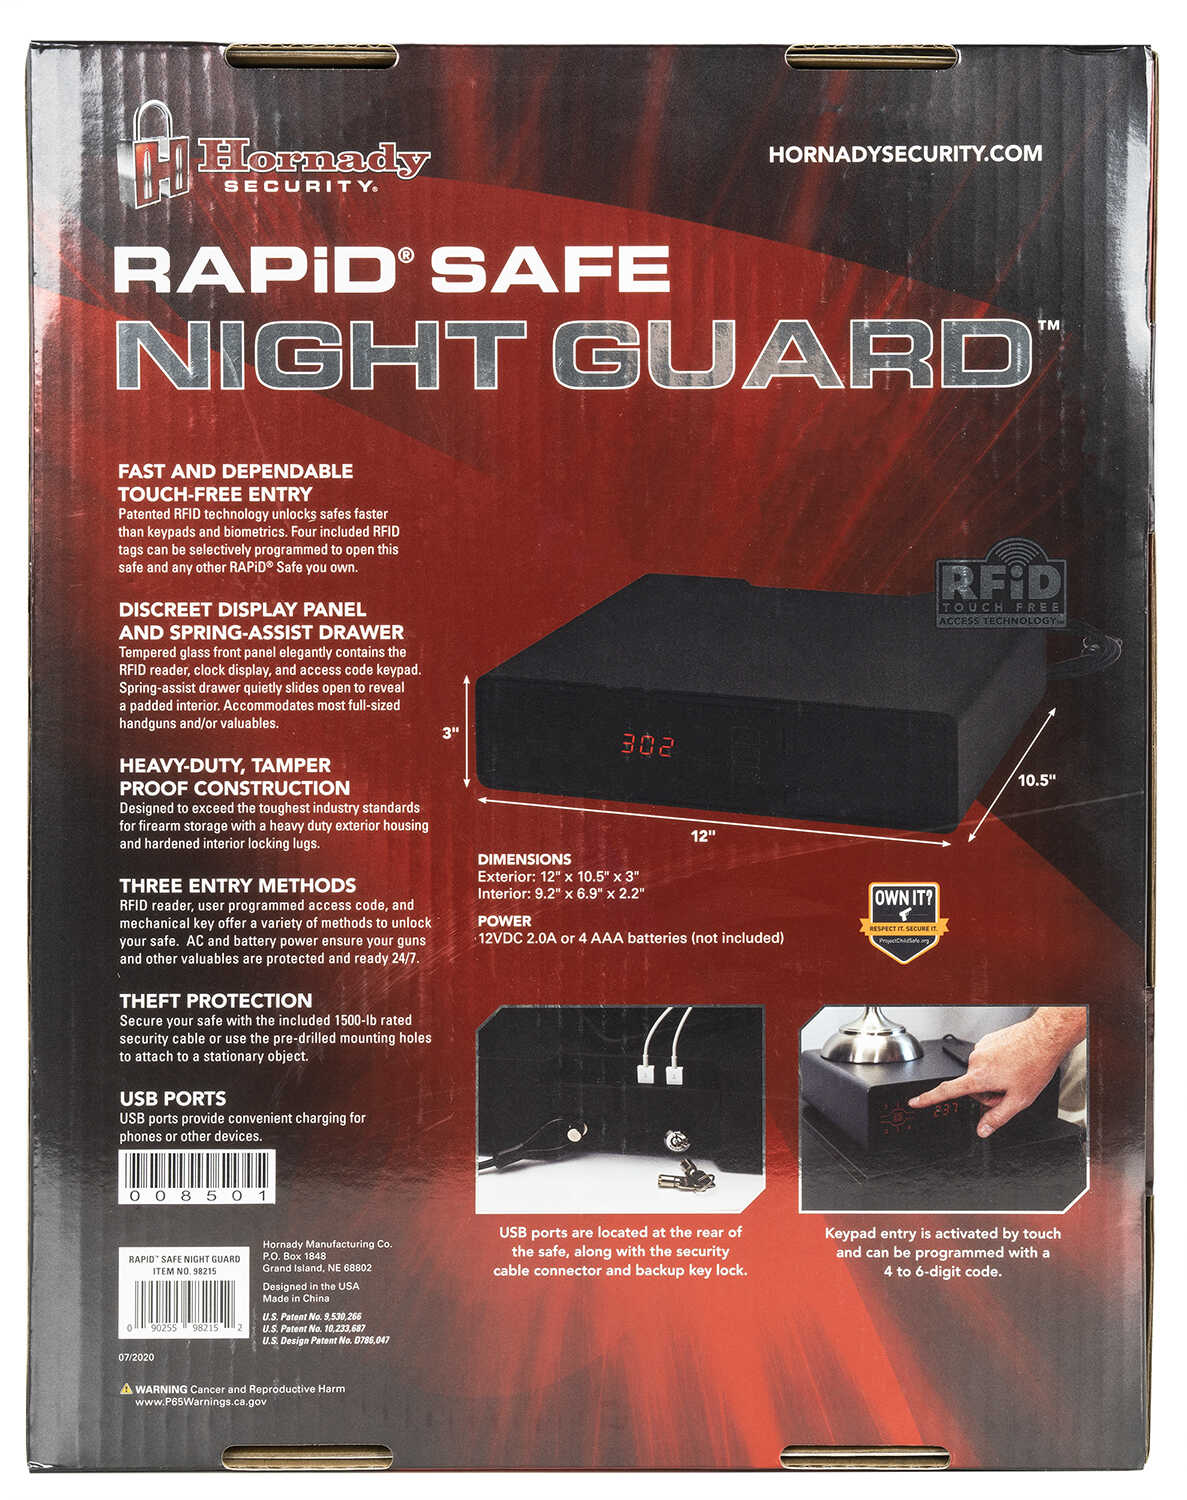 Hornady 98215 Rapid Safe Night Guard RFID,Access Code,Key Black